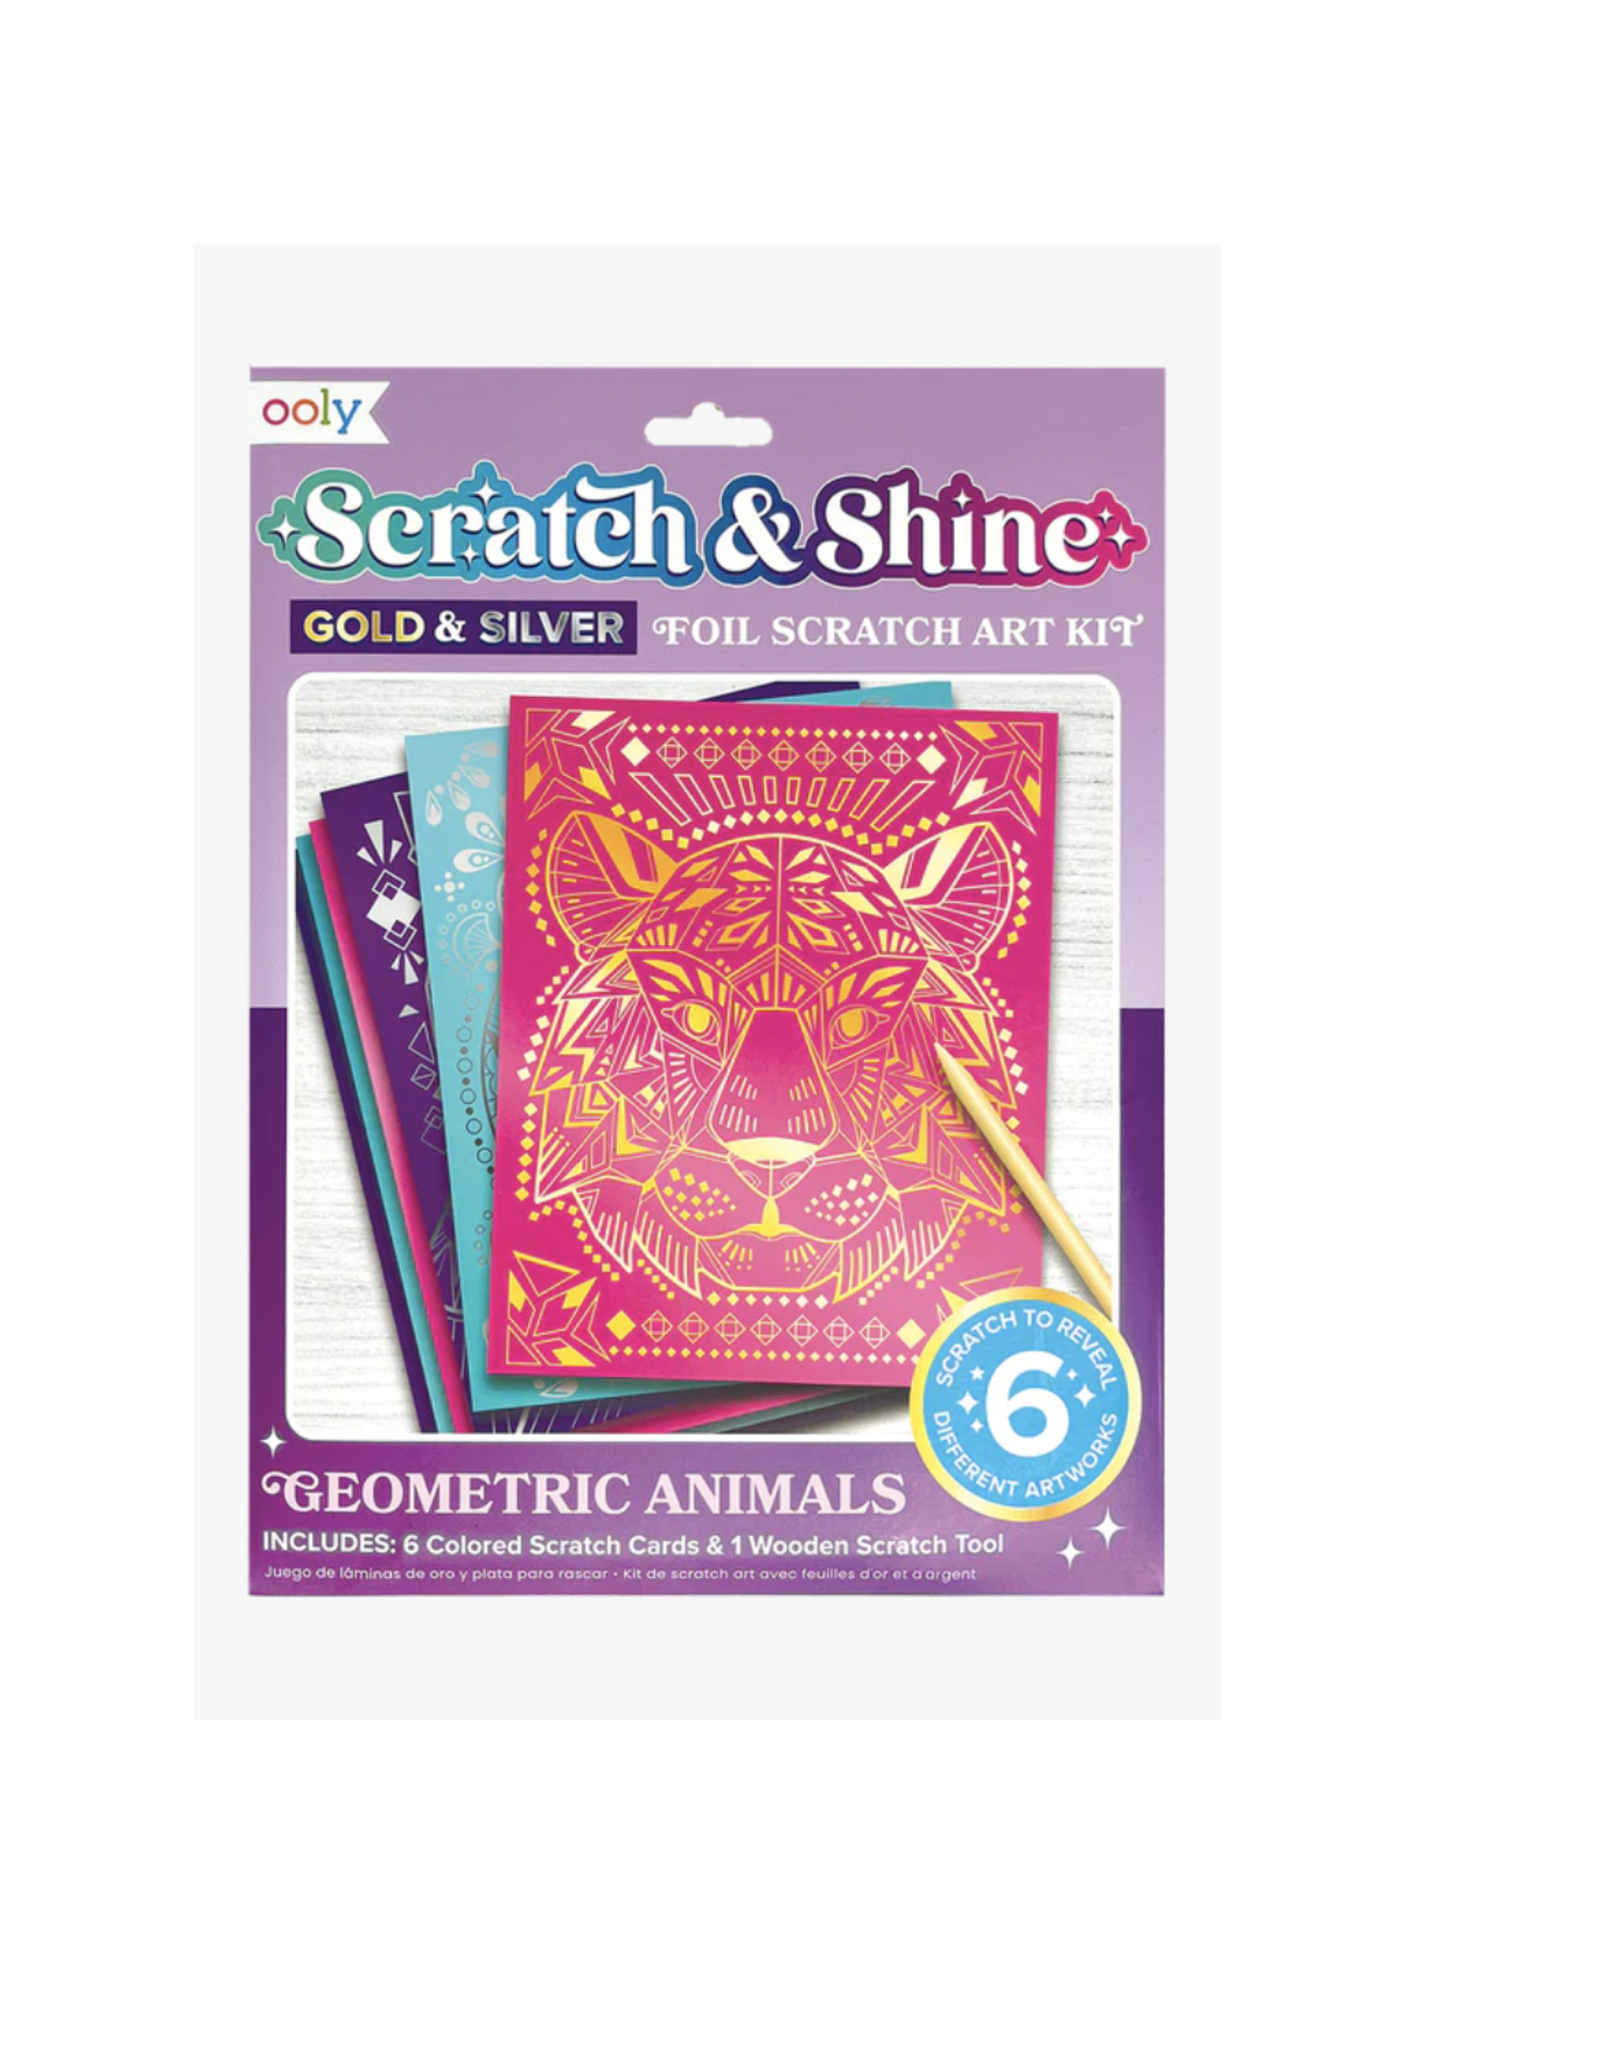 Ooly Scratch & Shine Foil Scratch Art Kit - Geo Animals